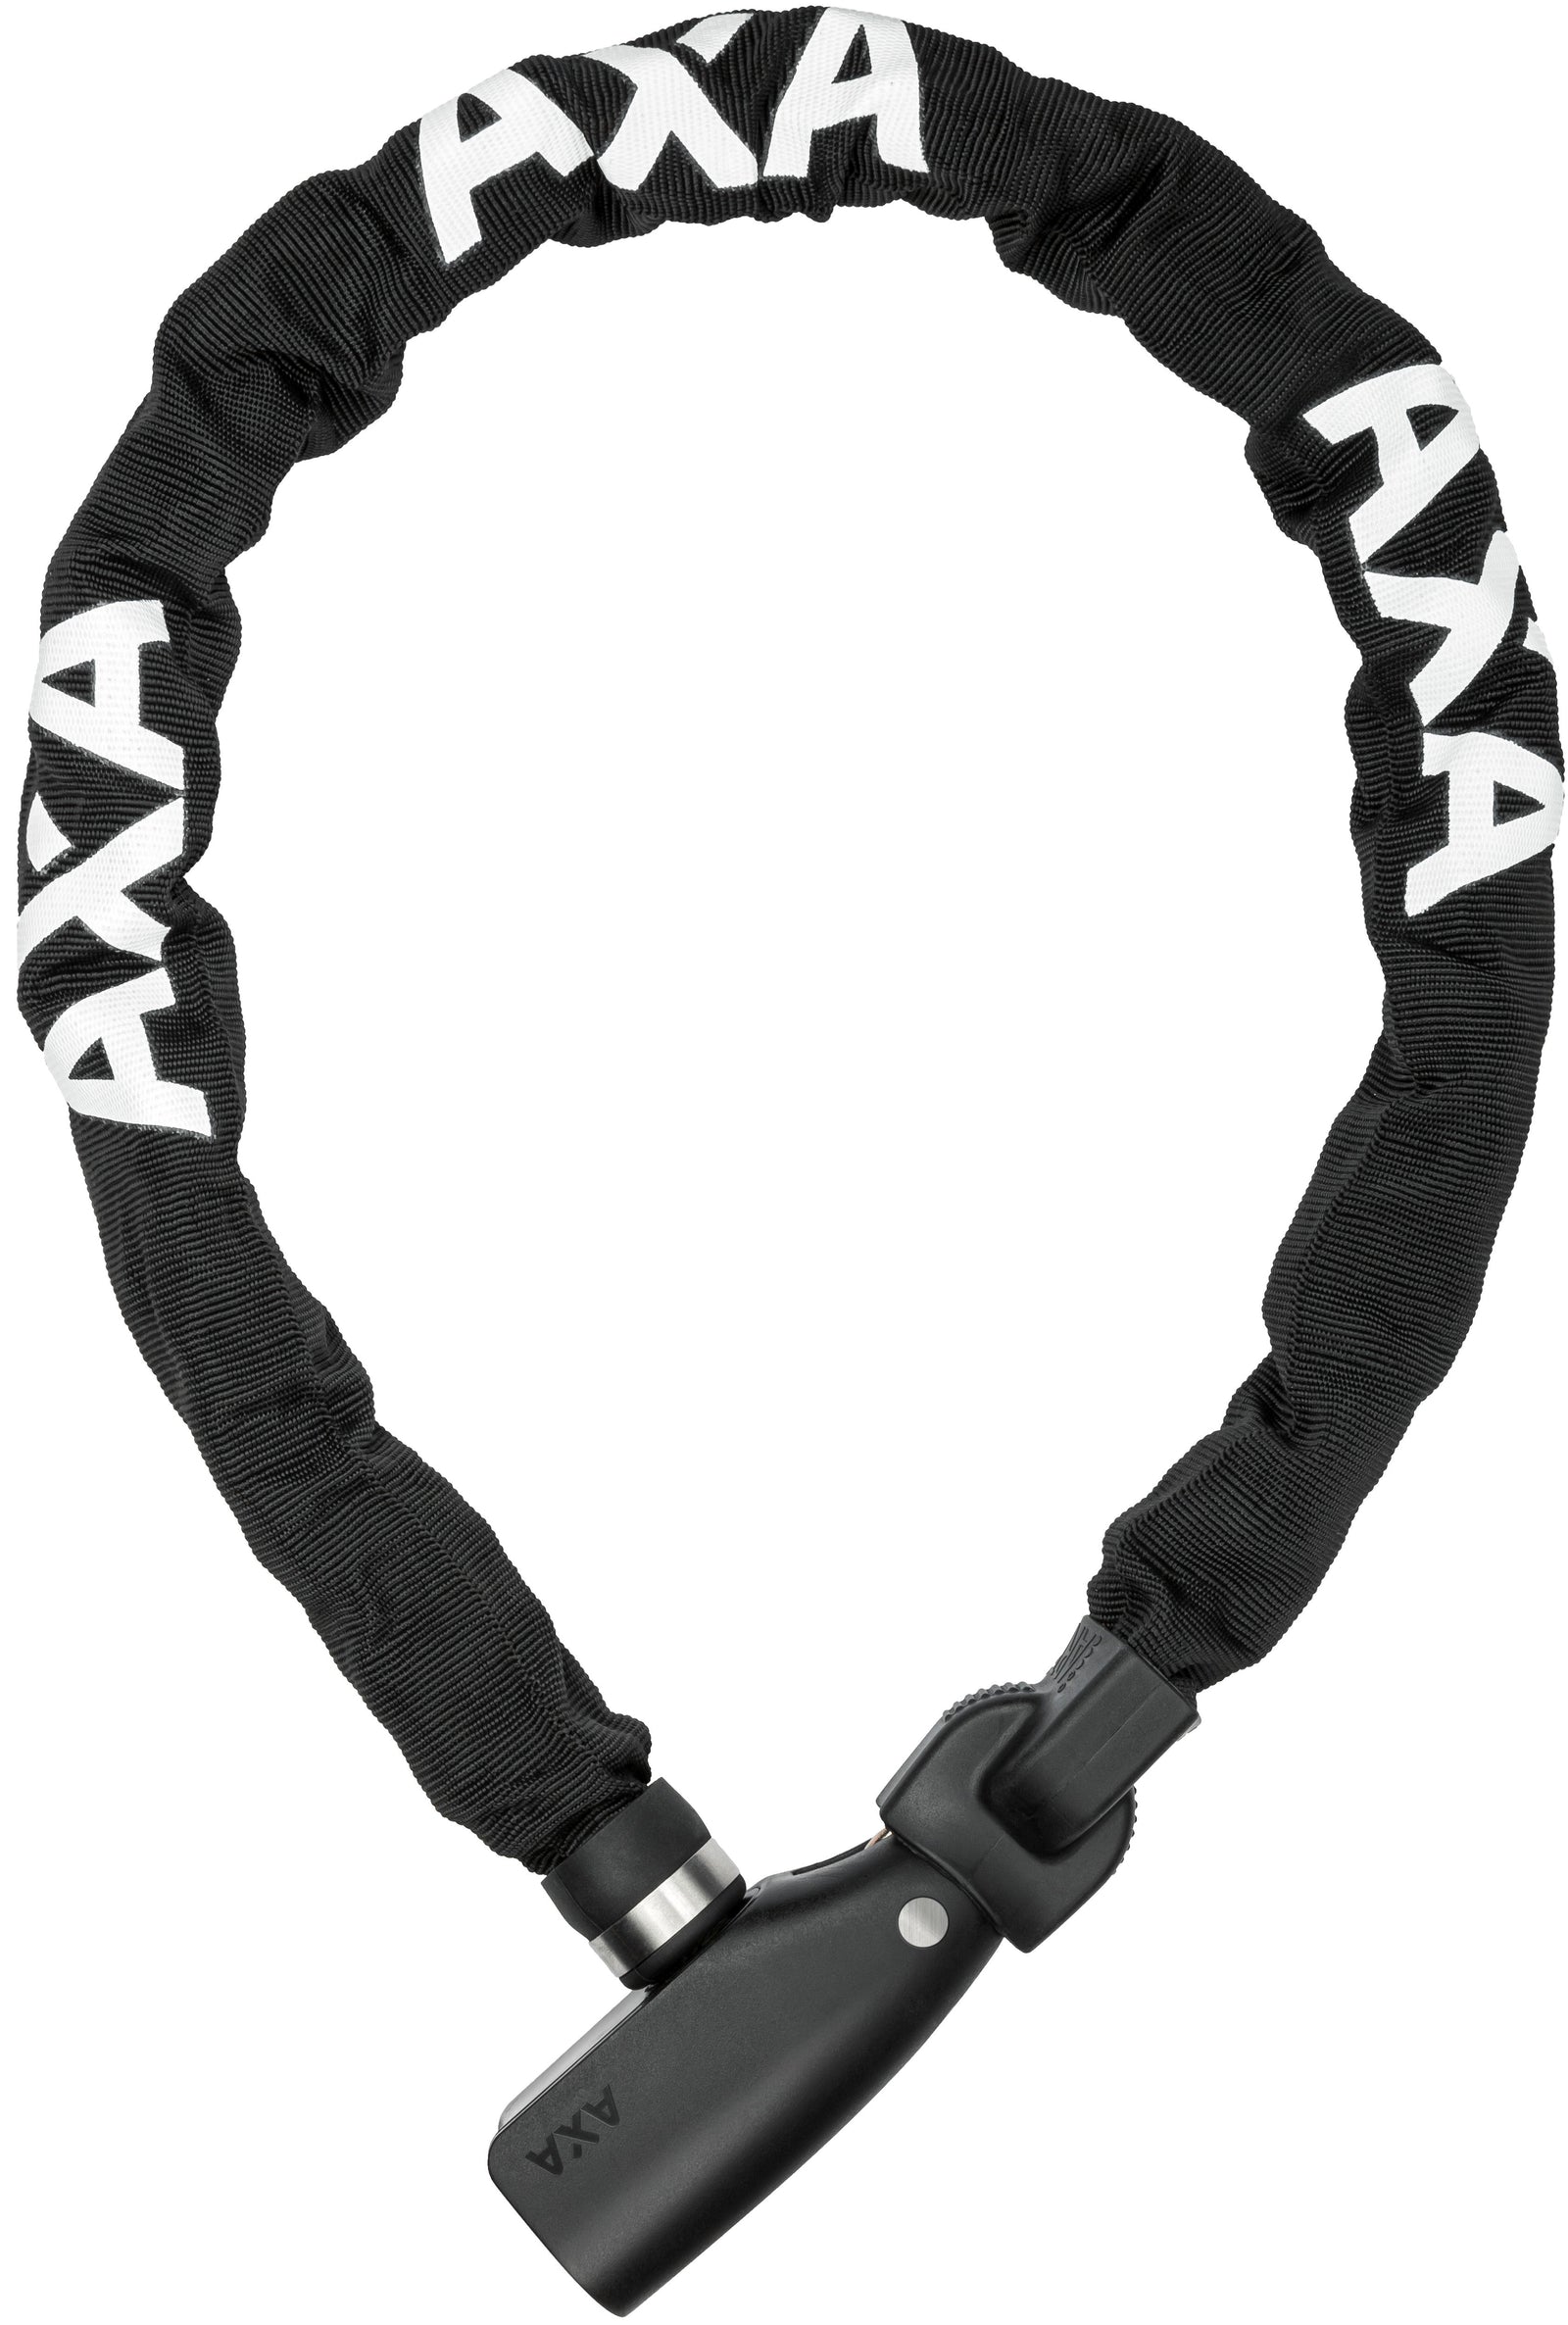 chain lock Absolute 1100 x 5 mm black